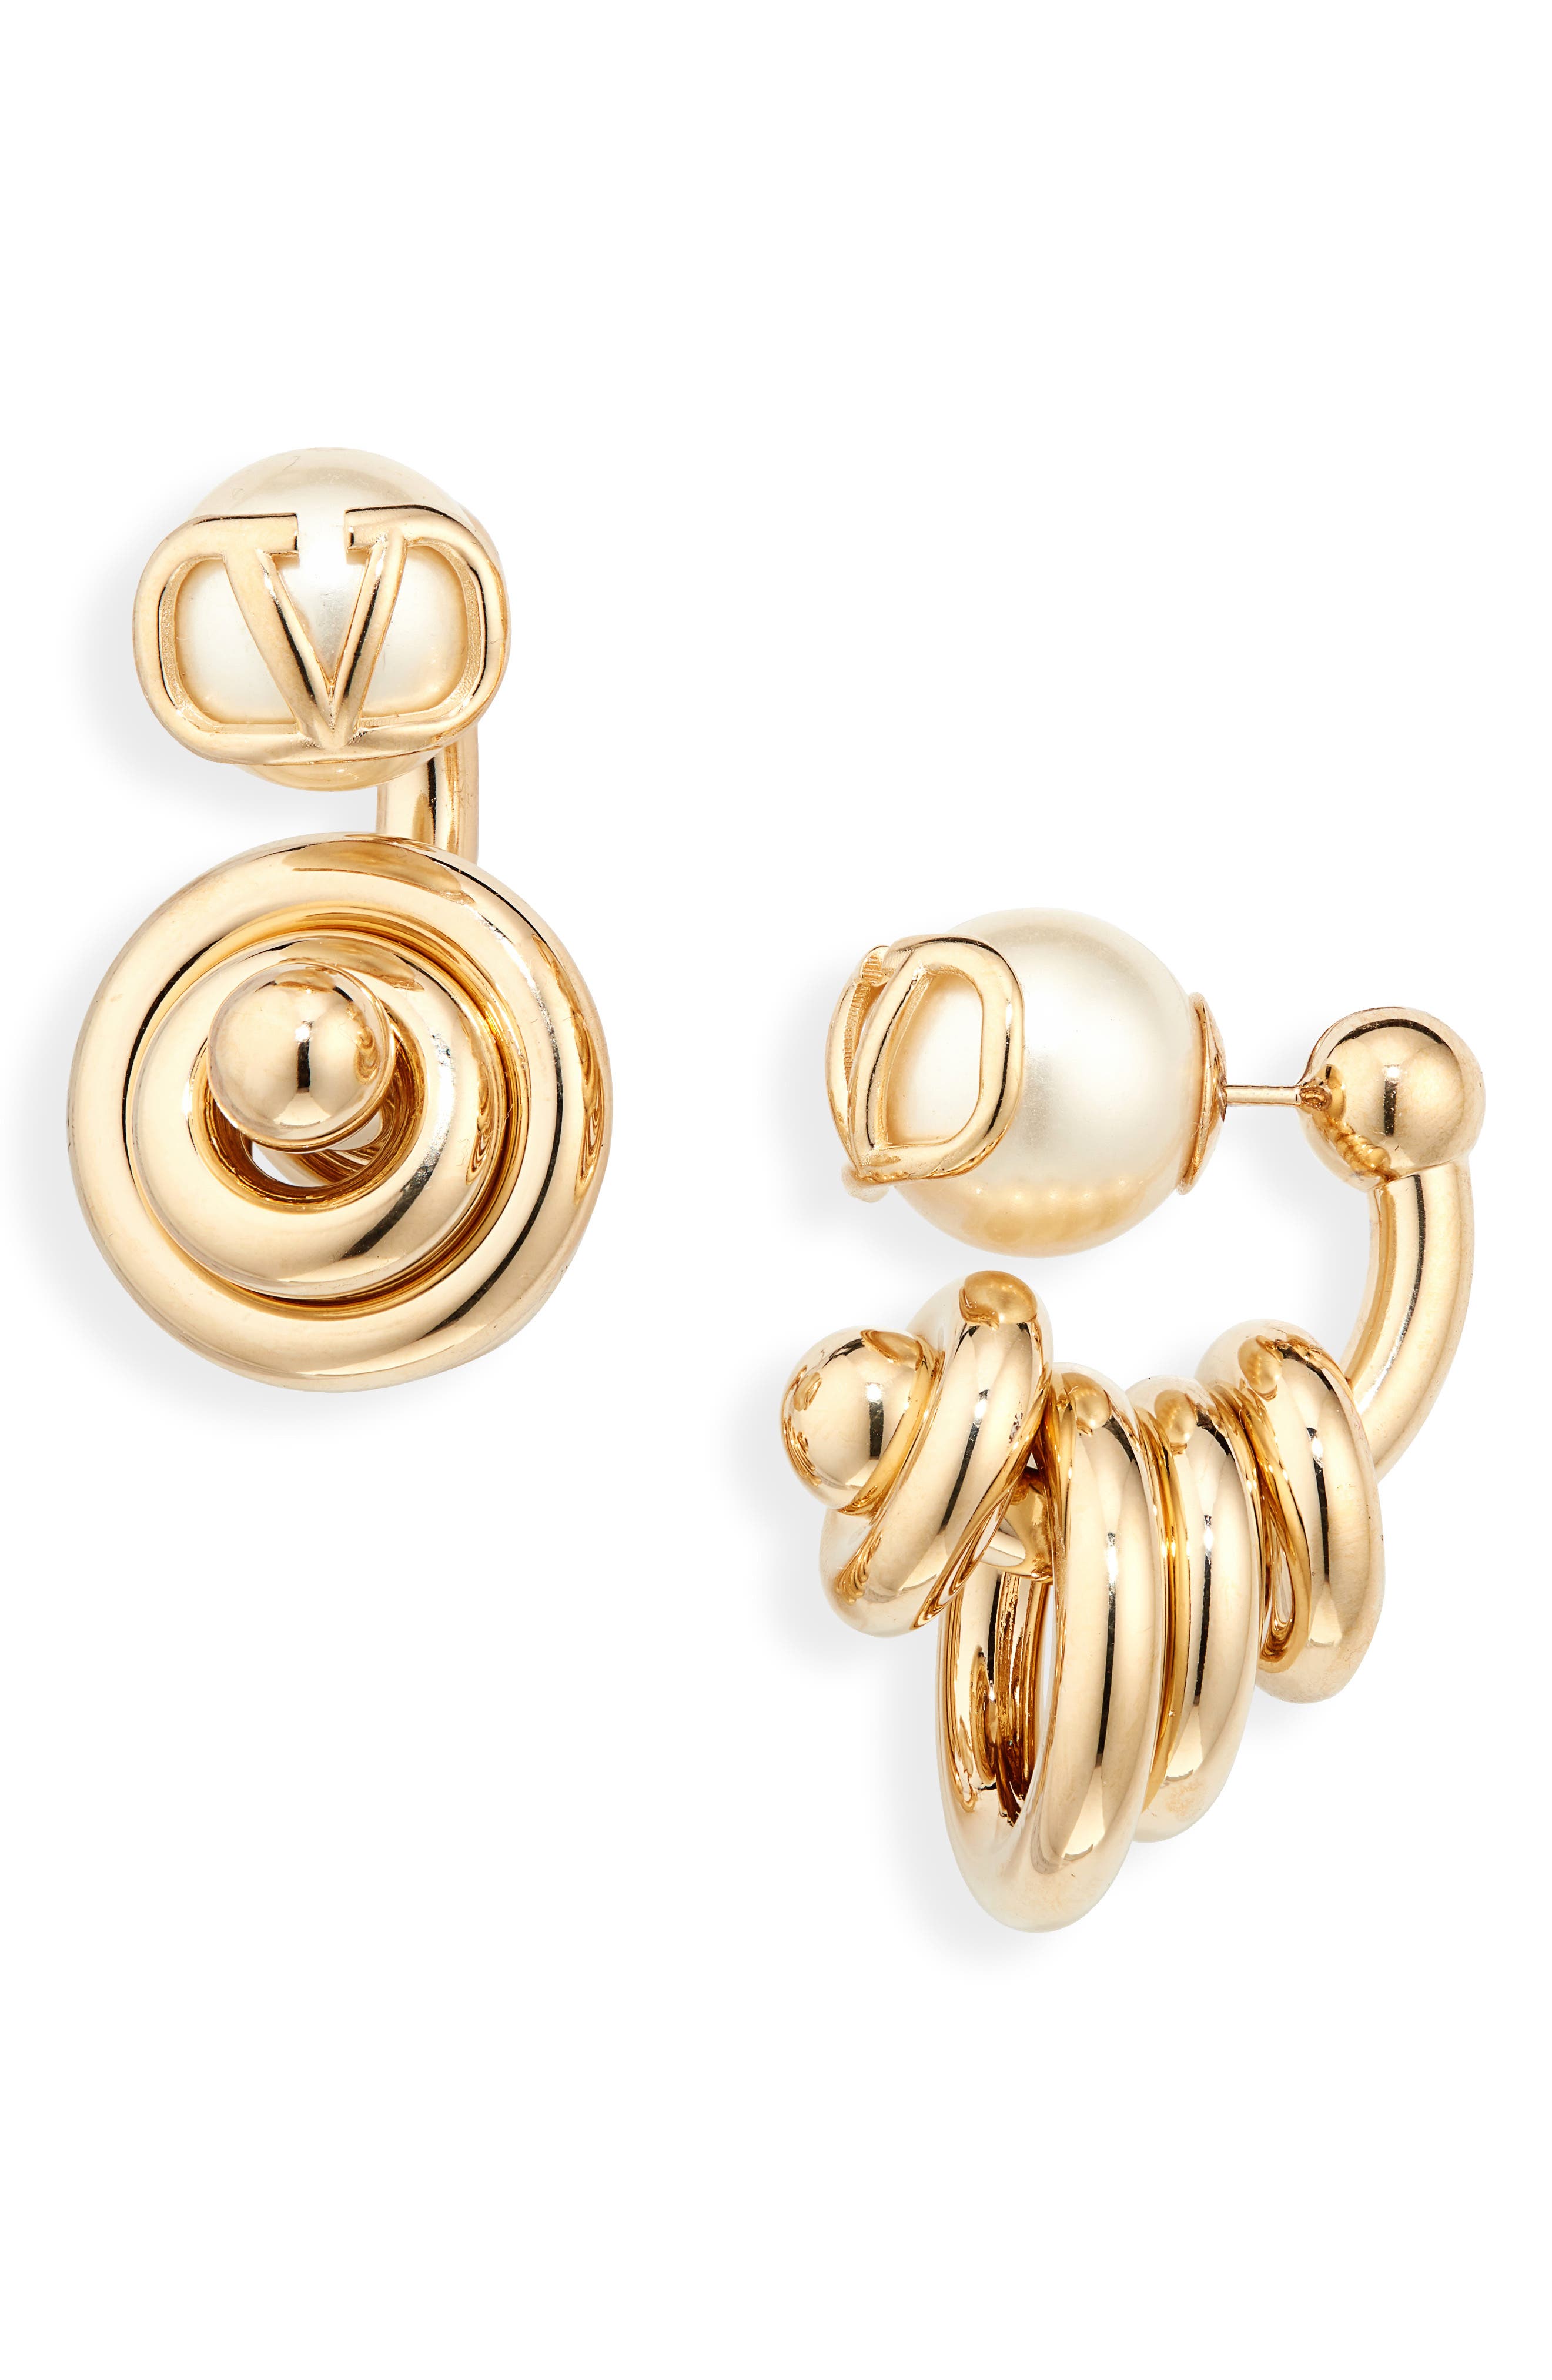 Valentino Garavani VLogo Signature hoop earrings - Gold